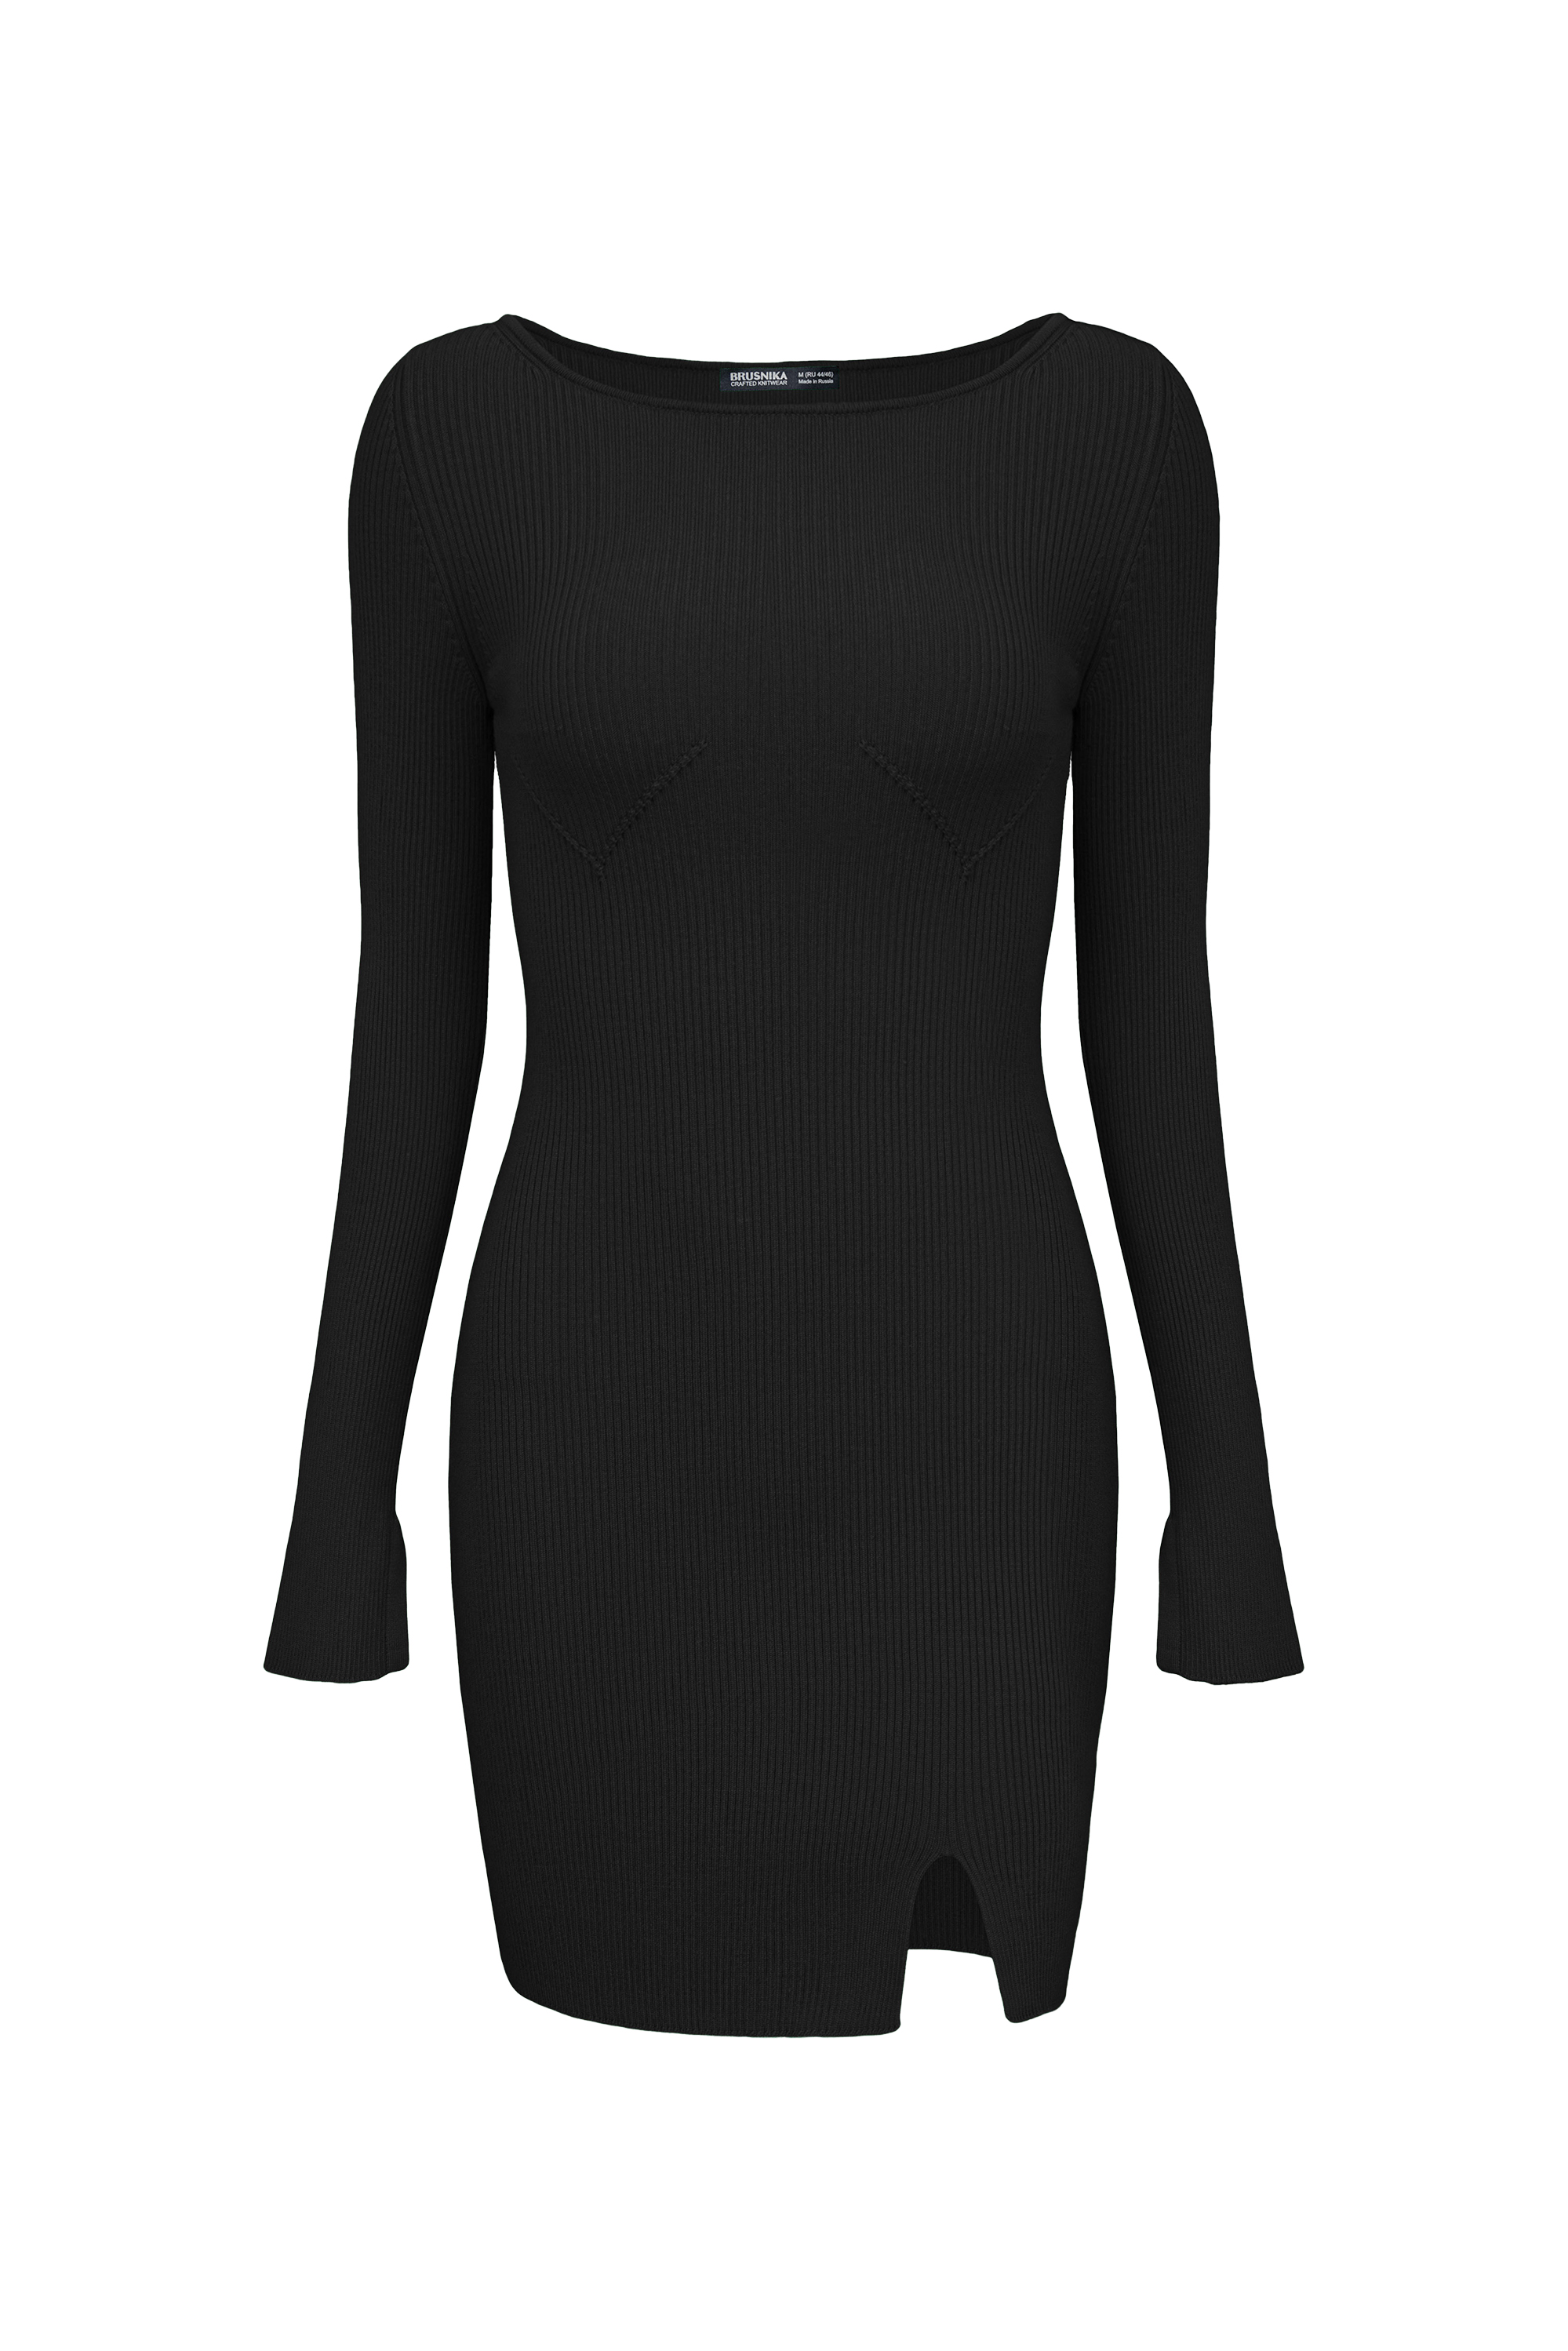 Dress 4364-01 Black from BRUSNiKA